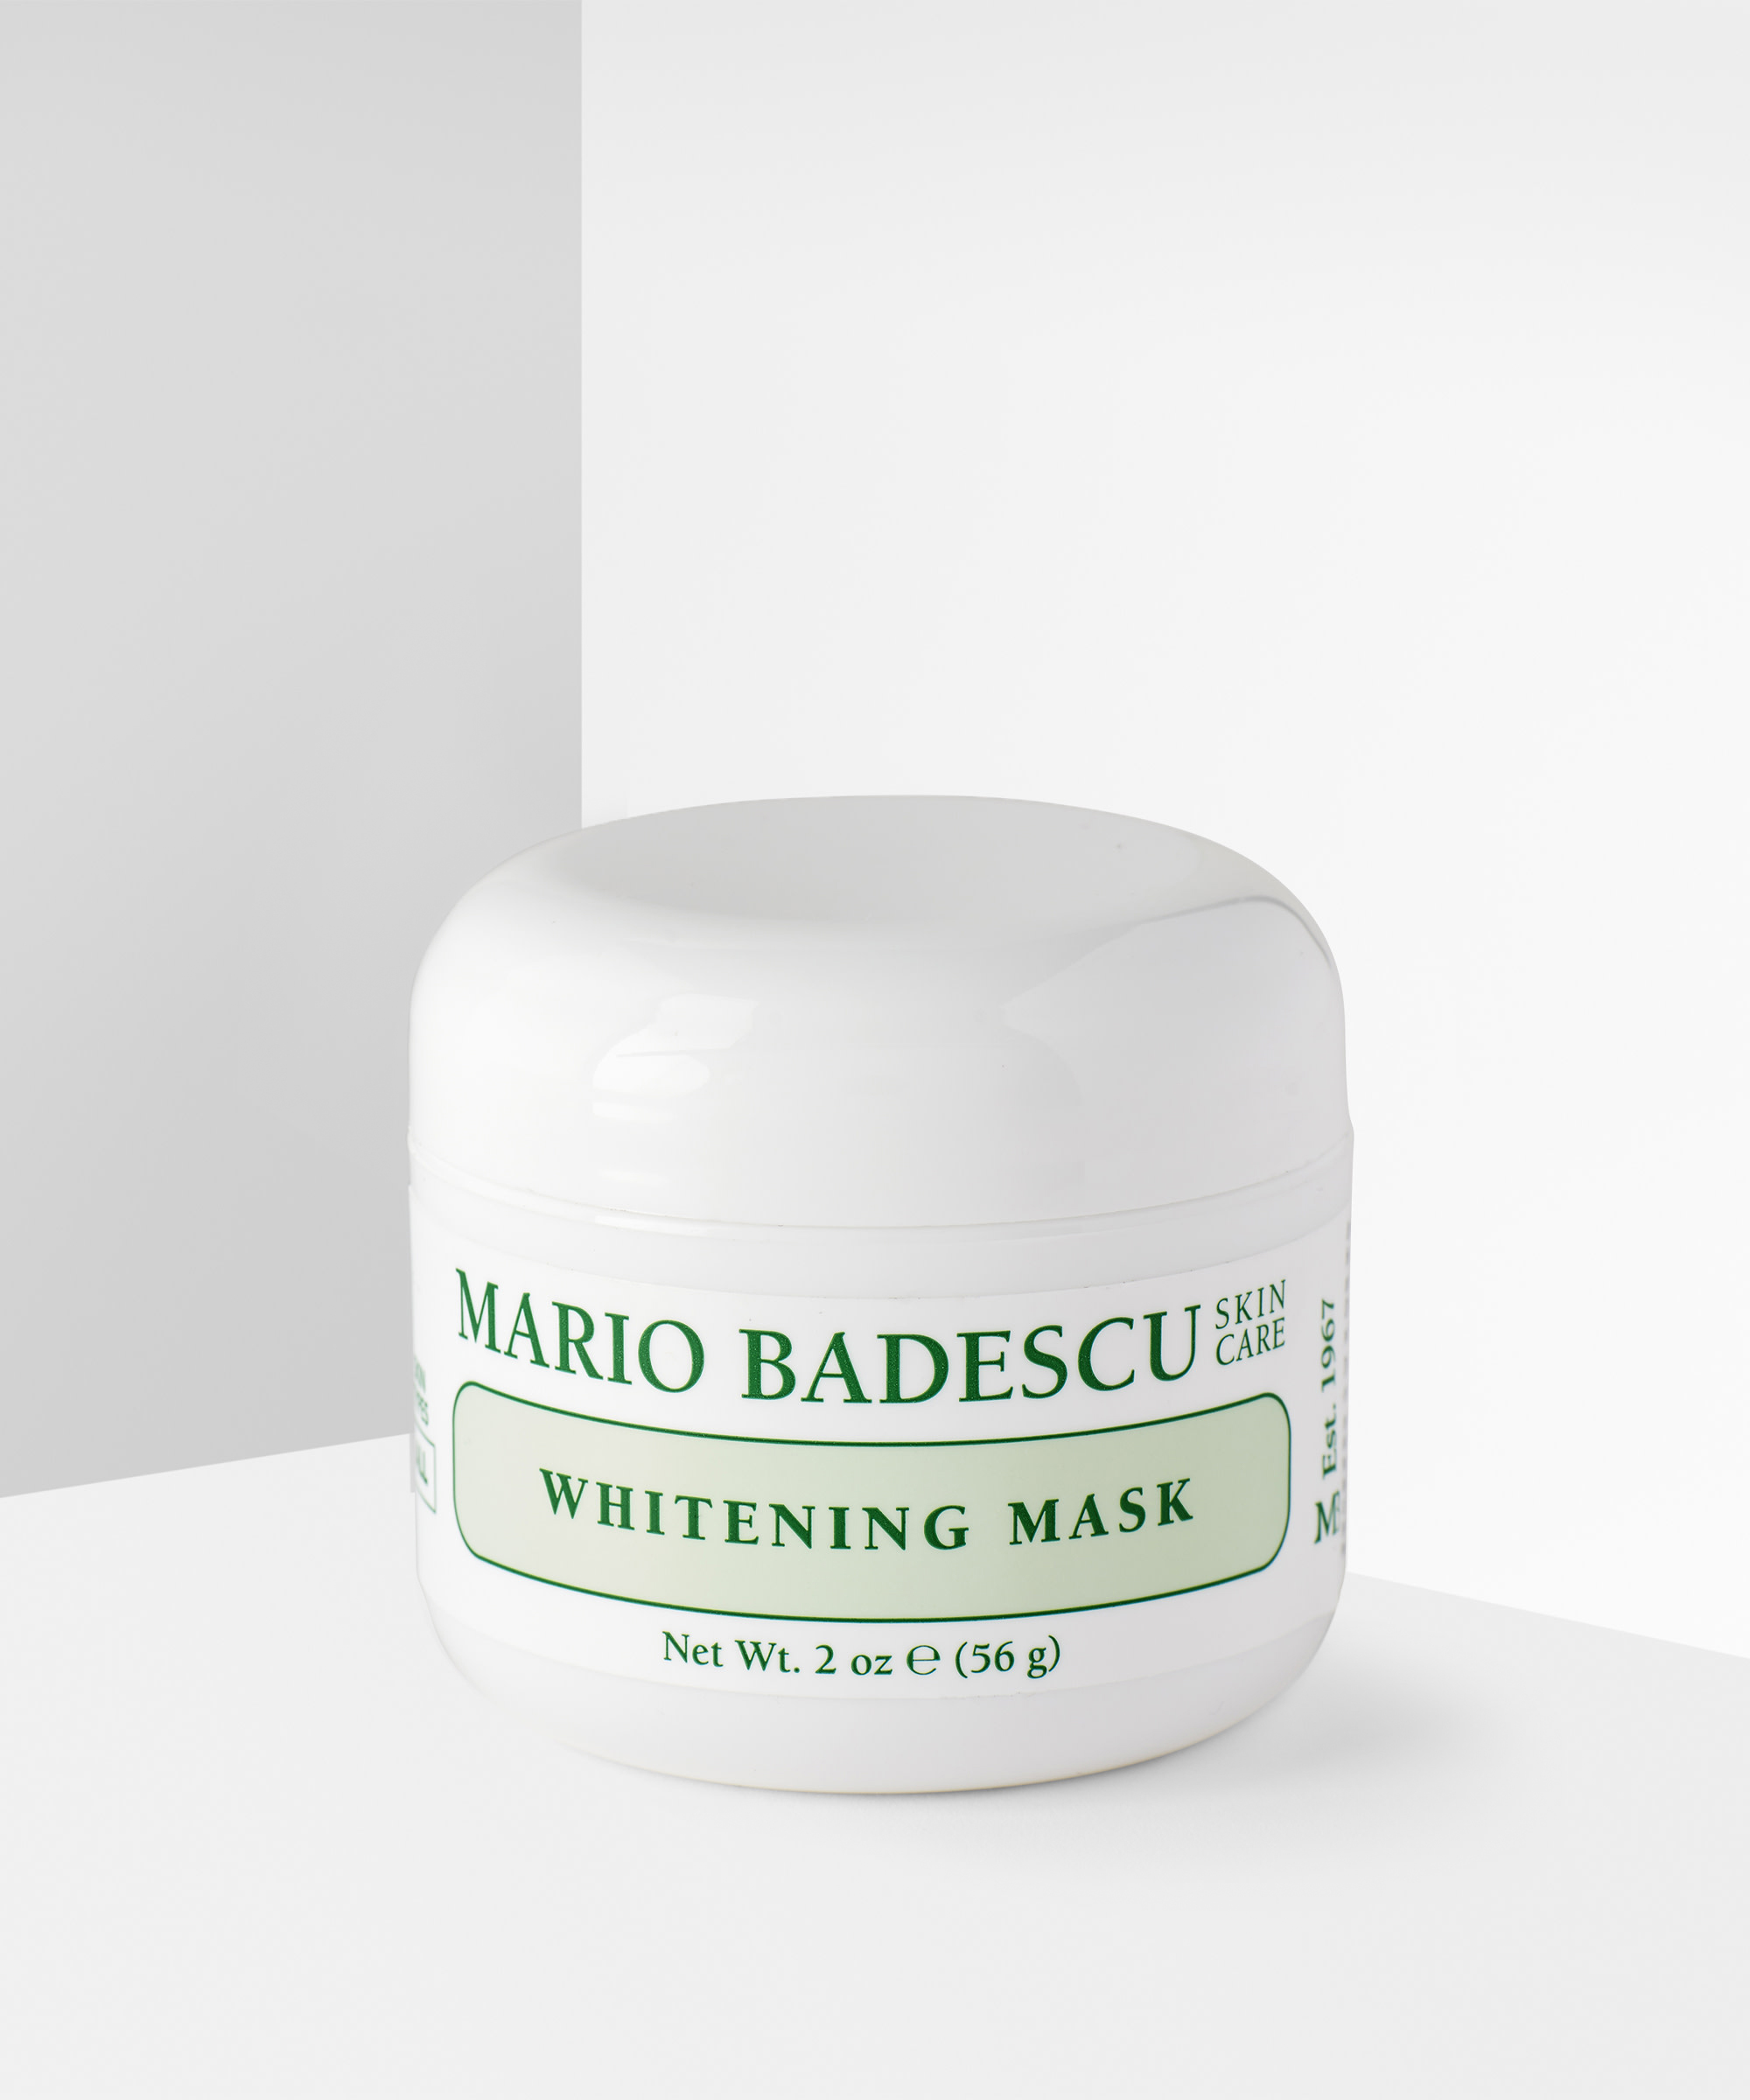 tør Rettidig overskæg Mario Badescu Whitening Mask at BEAUTY BAY